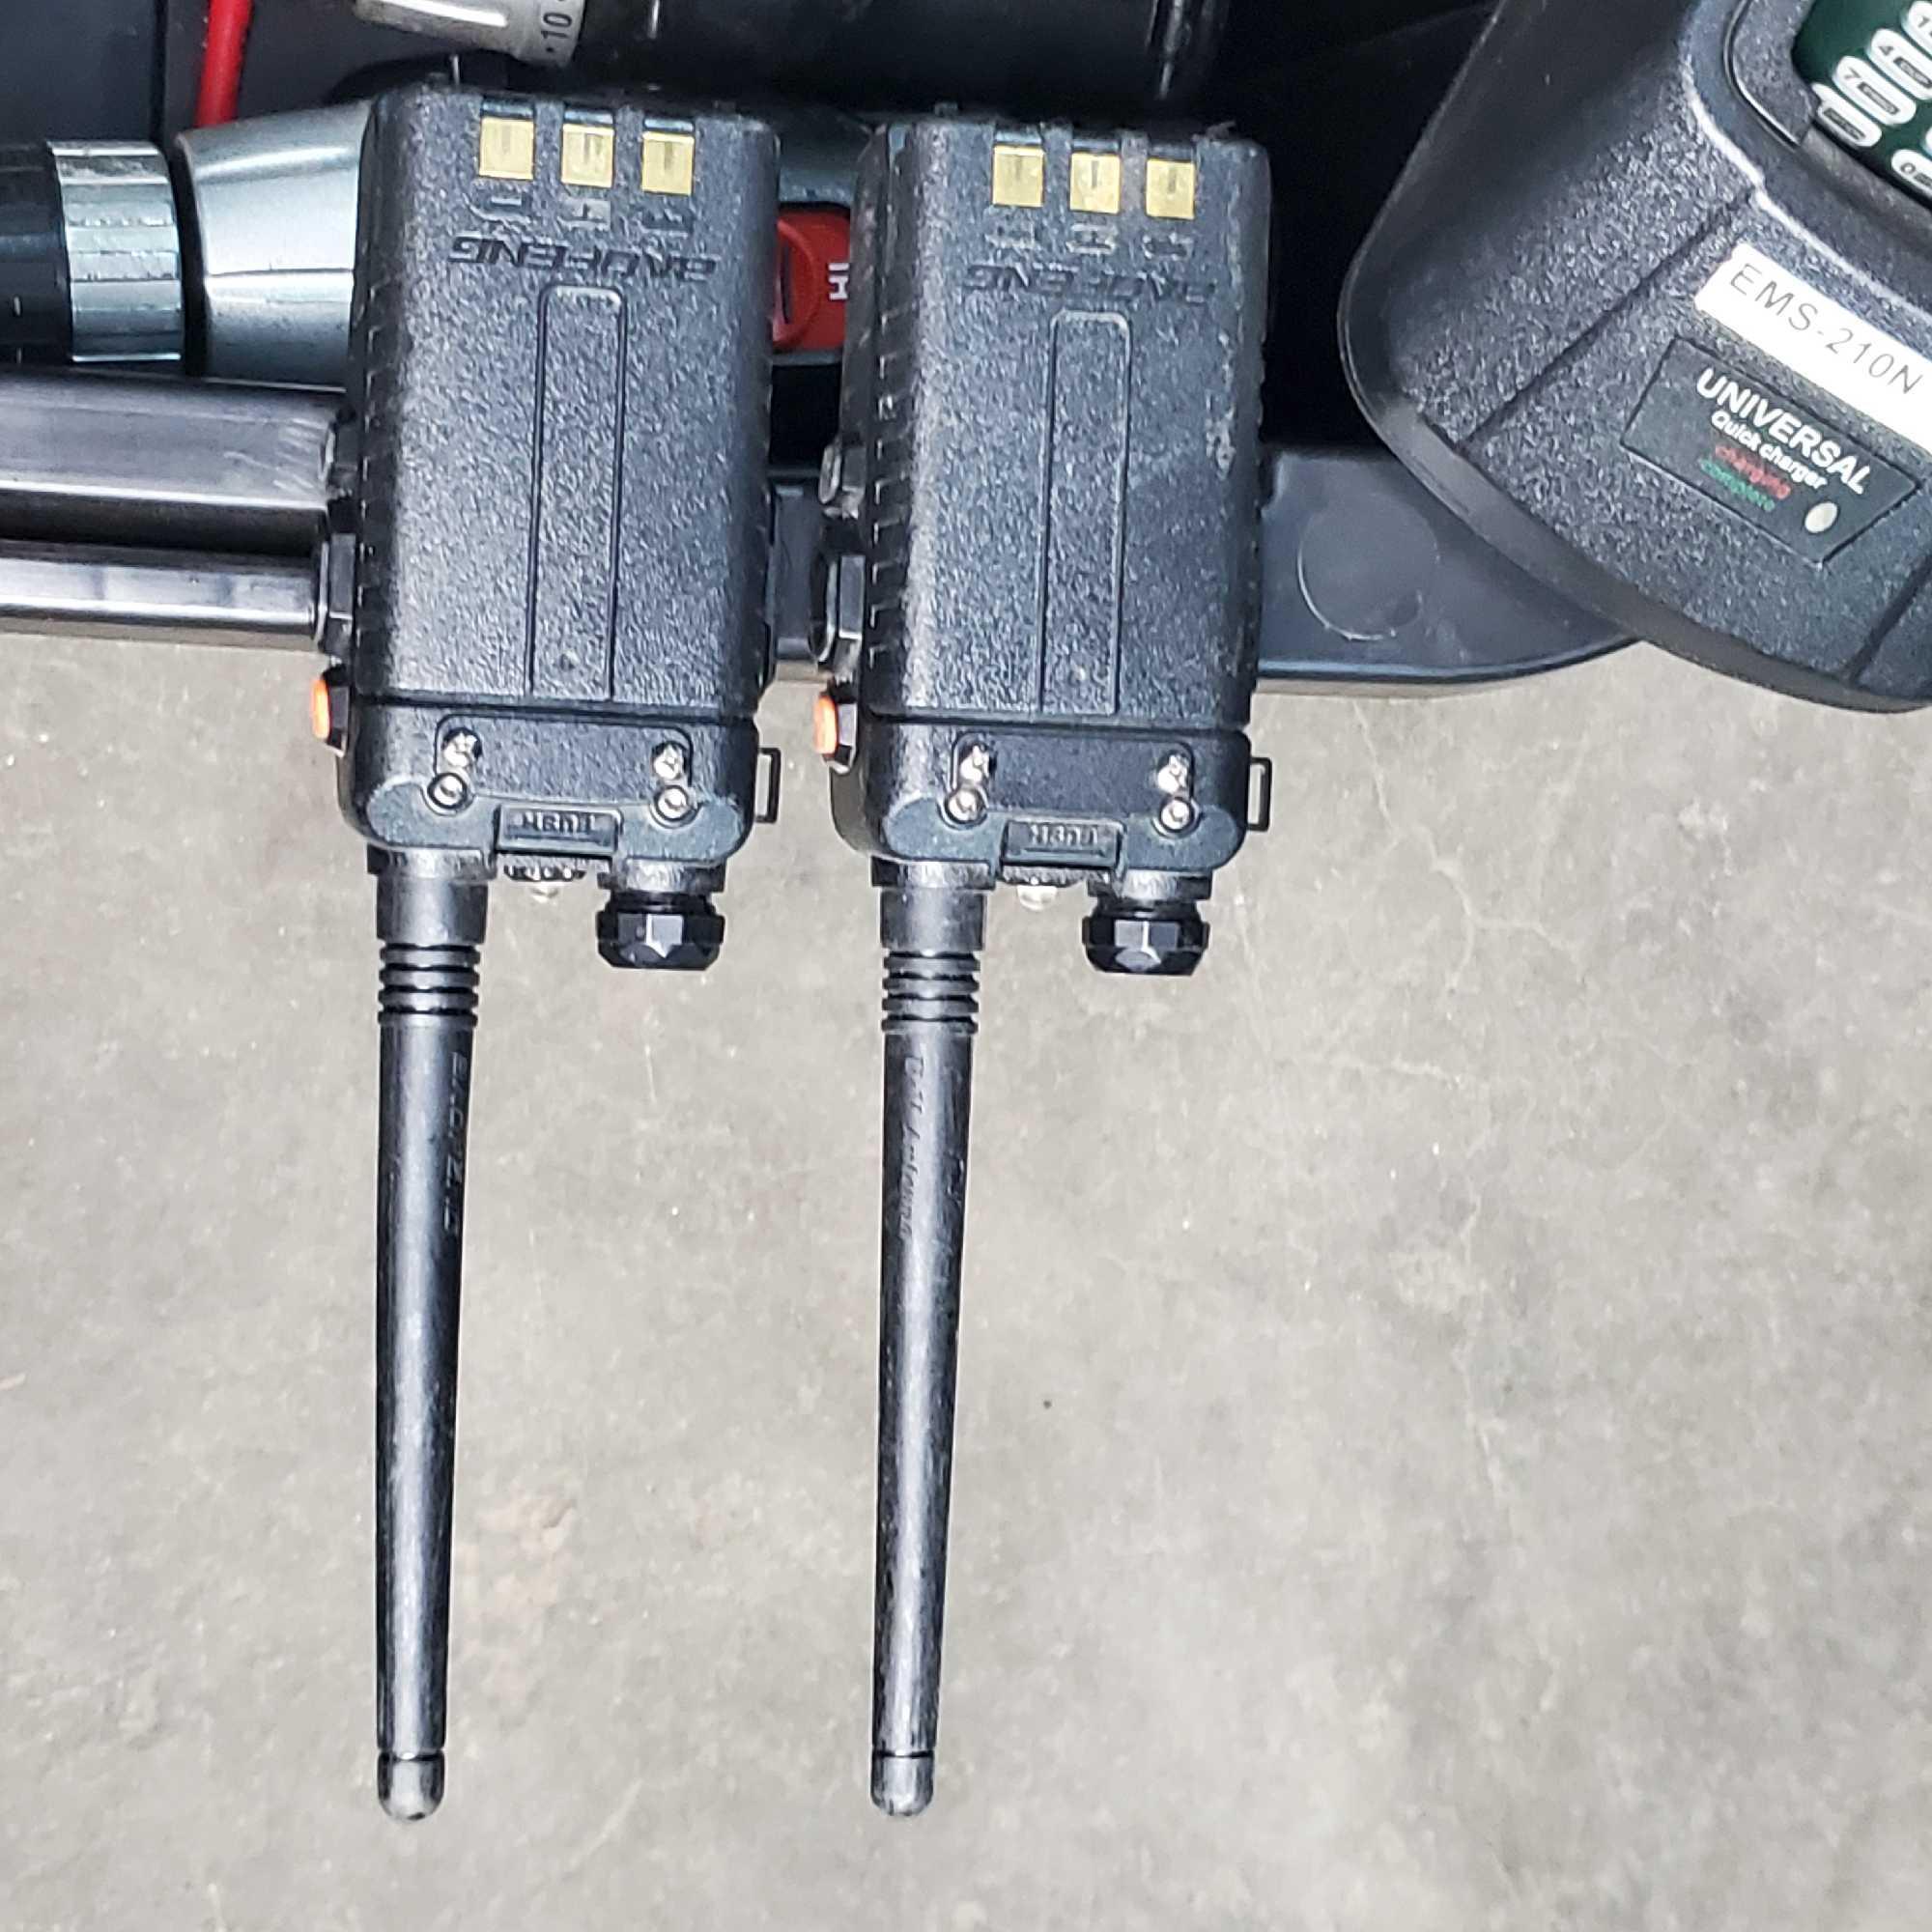 Bin cordless drills power grinder ohm/multimetersmeters walkie talkies Craftsman Coleman Coherent